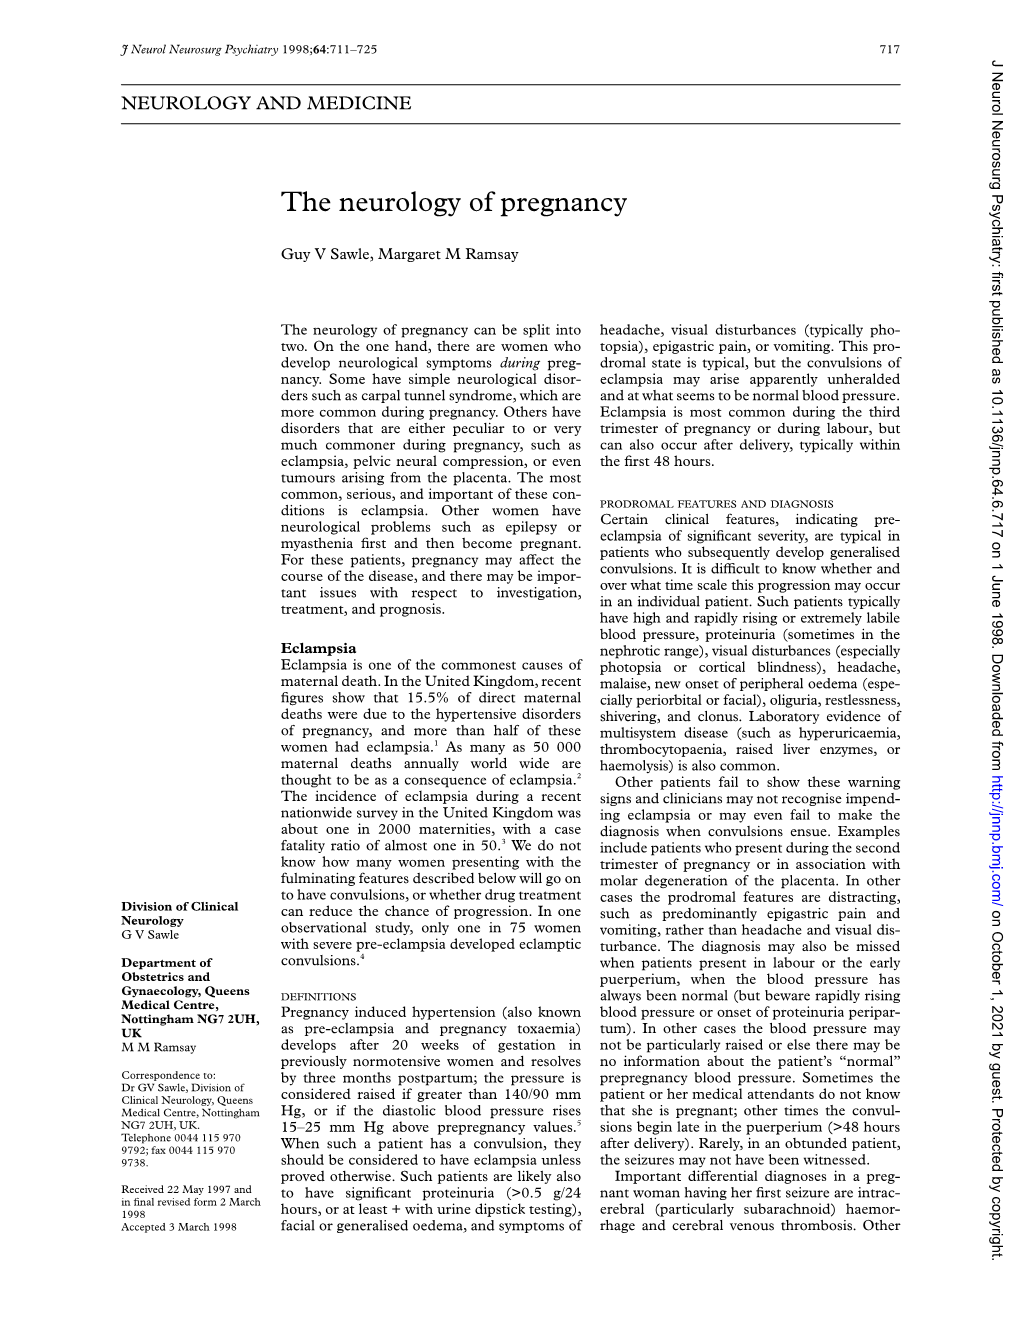 The Neurology of Pregnancy